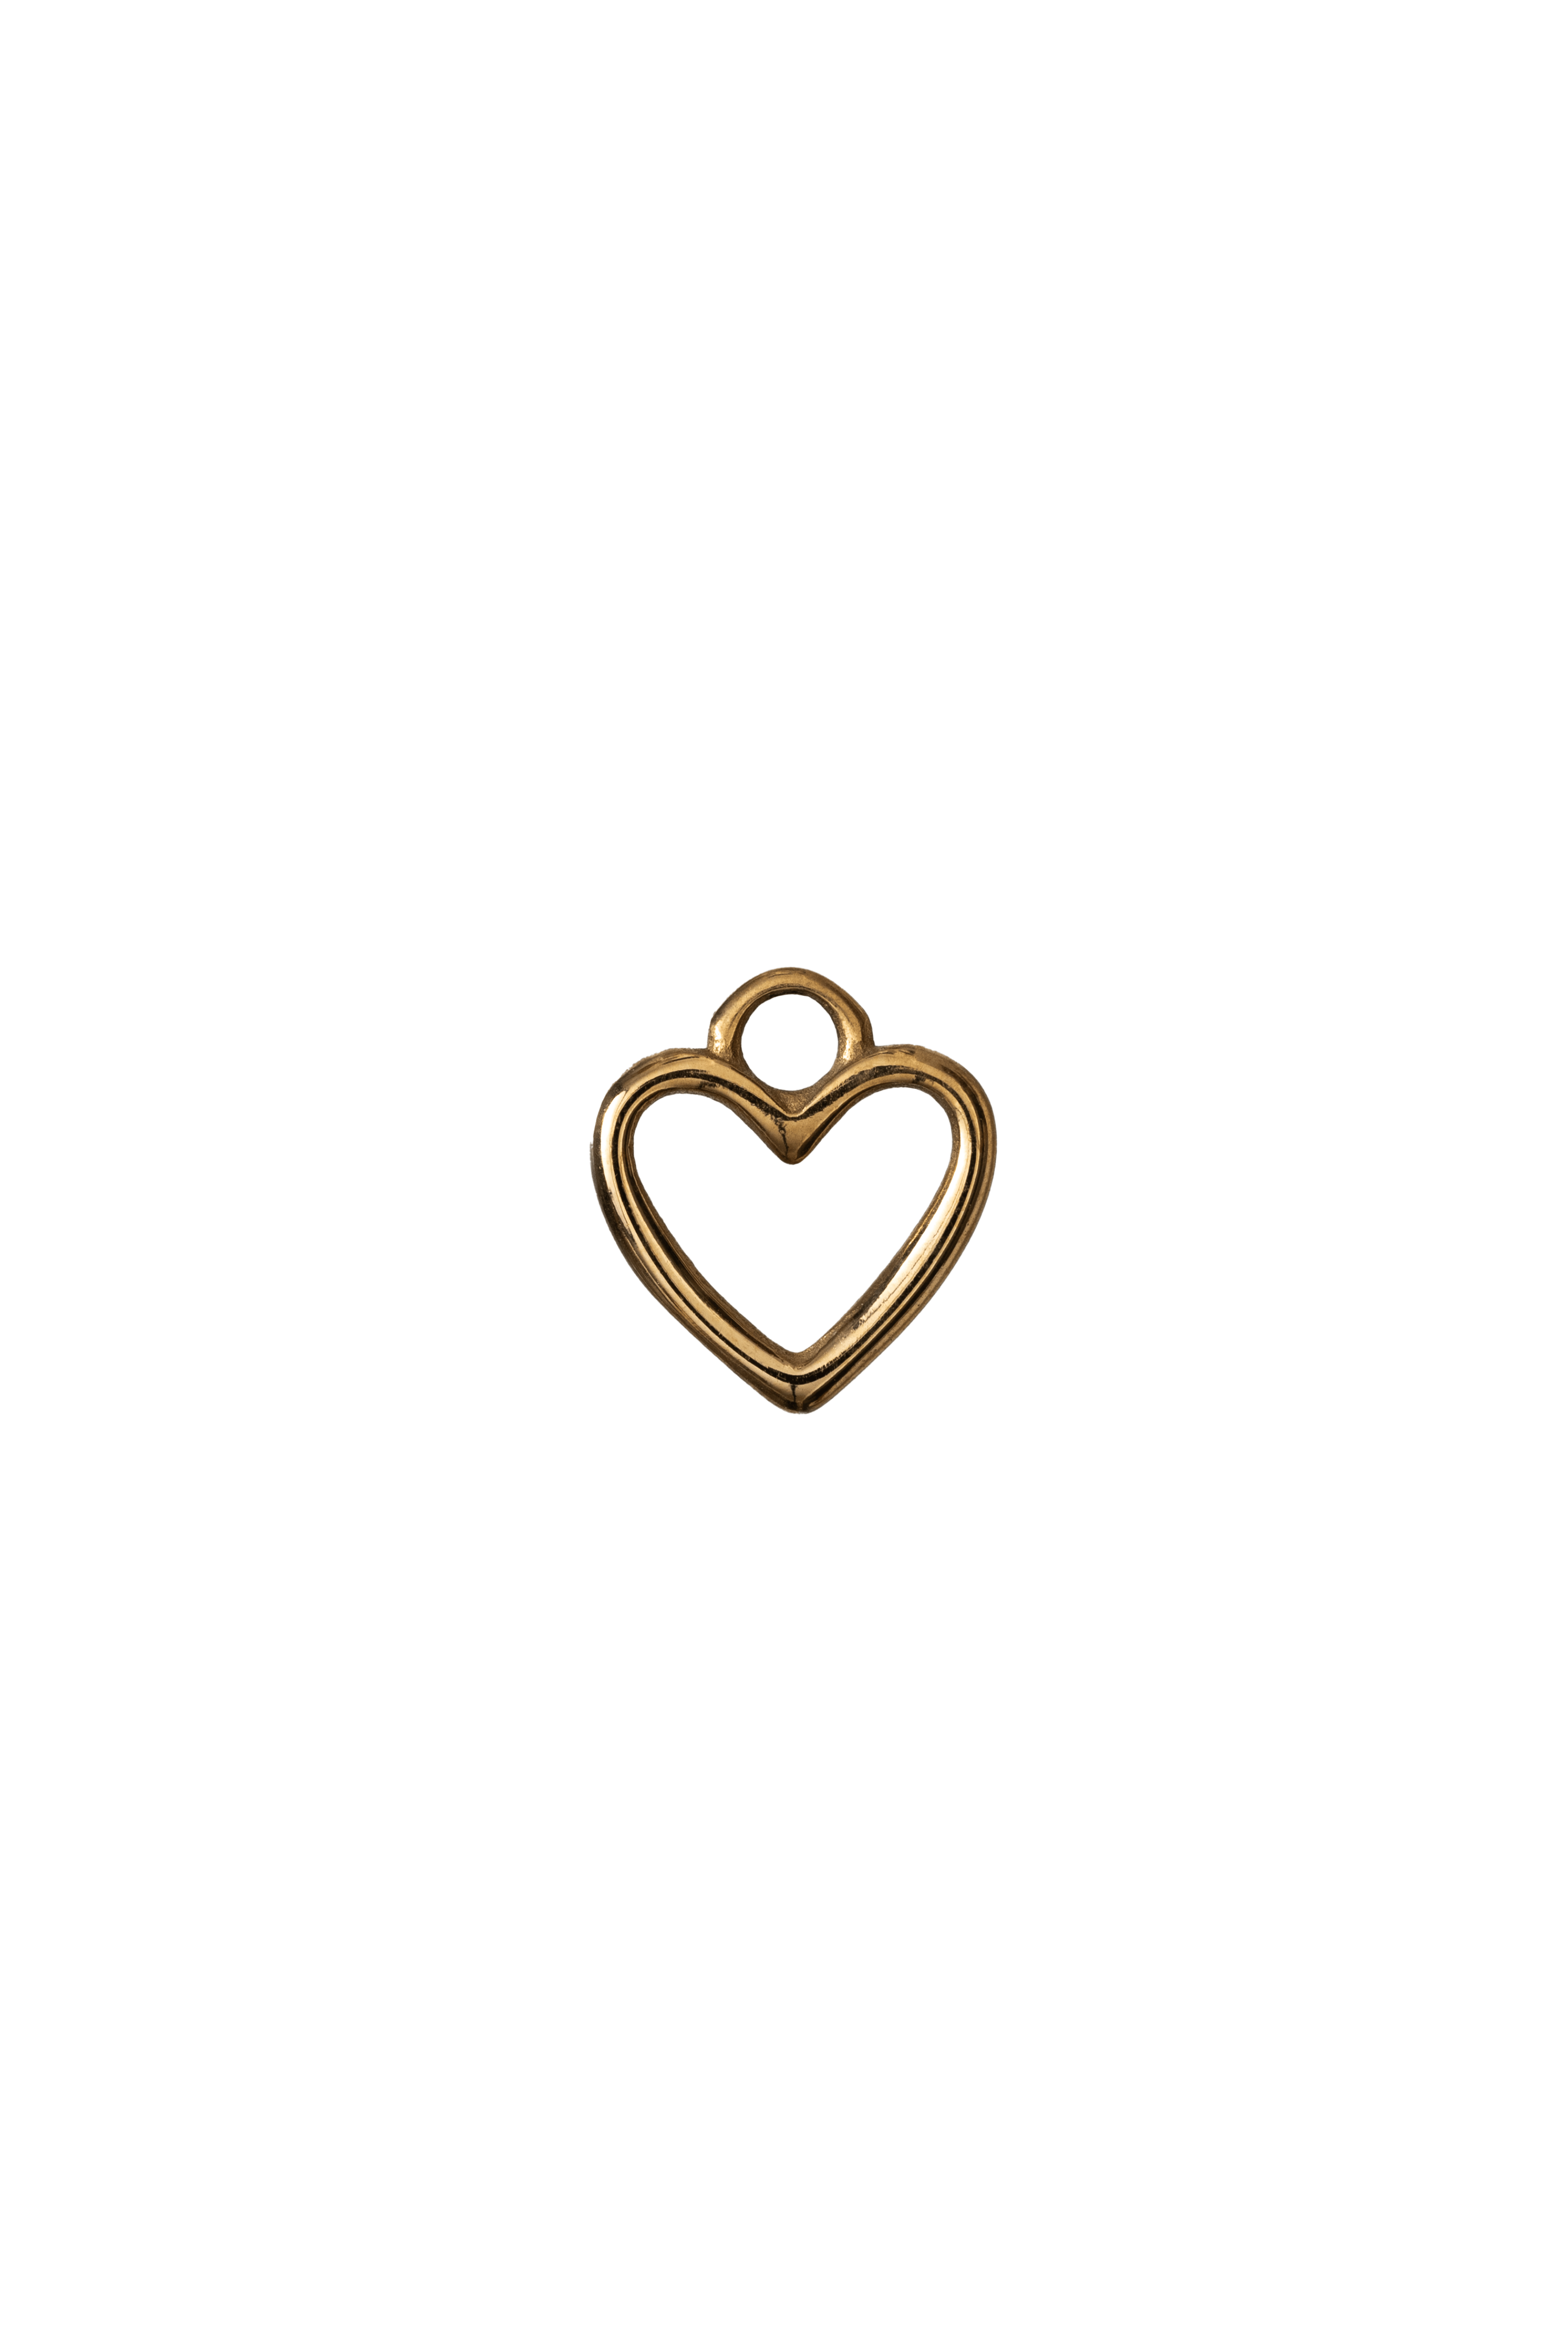 Heart Charm - caliorjewelry